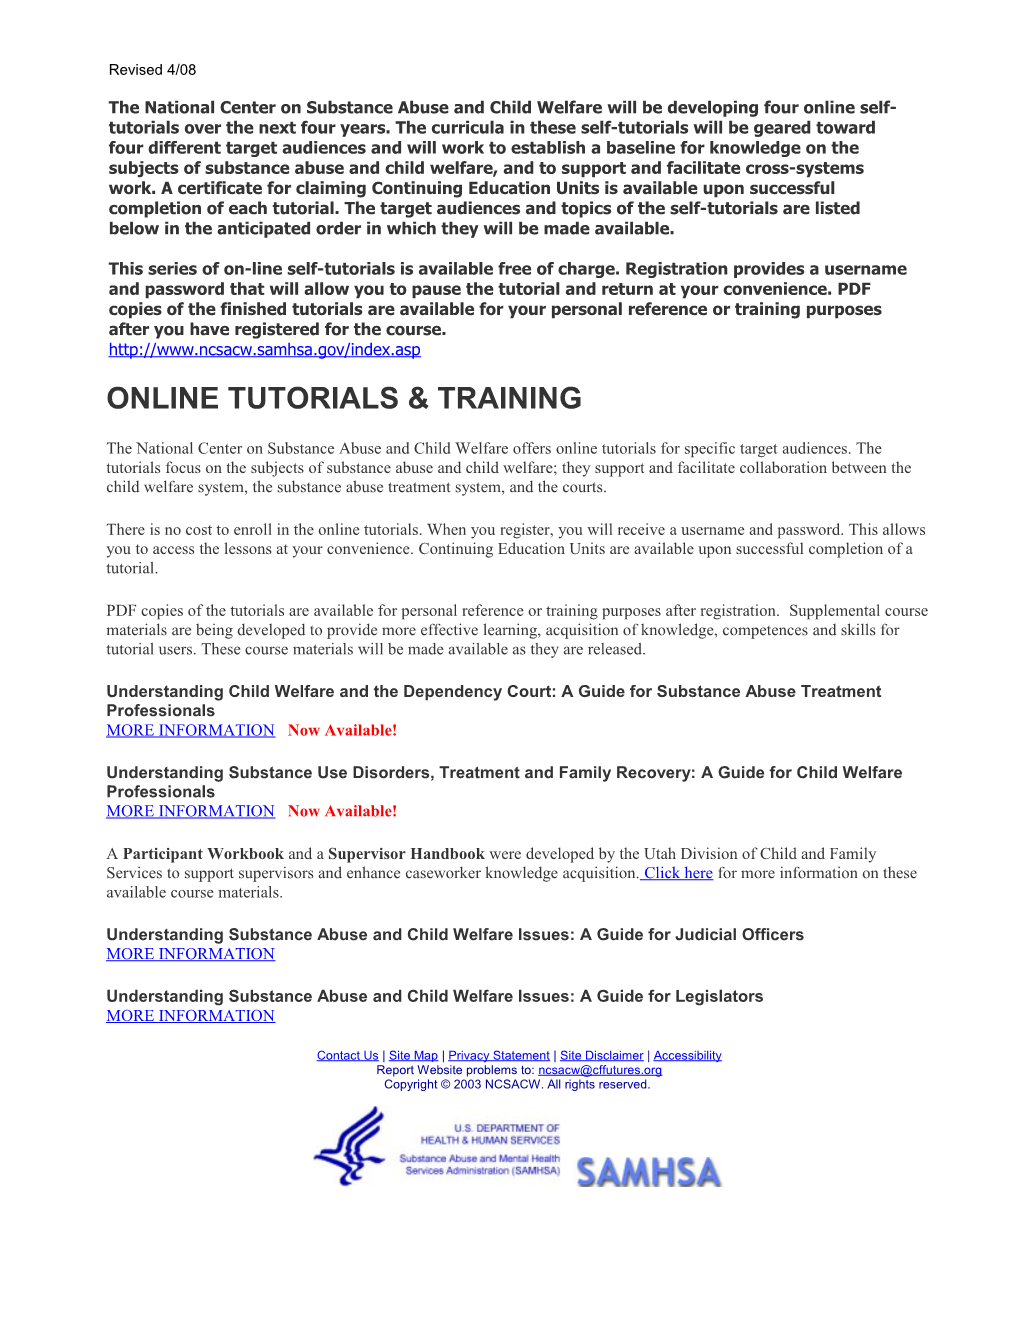 Professional Development Online Training Courses